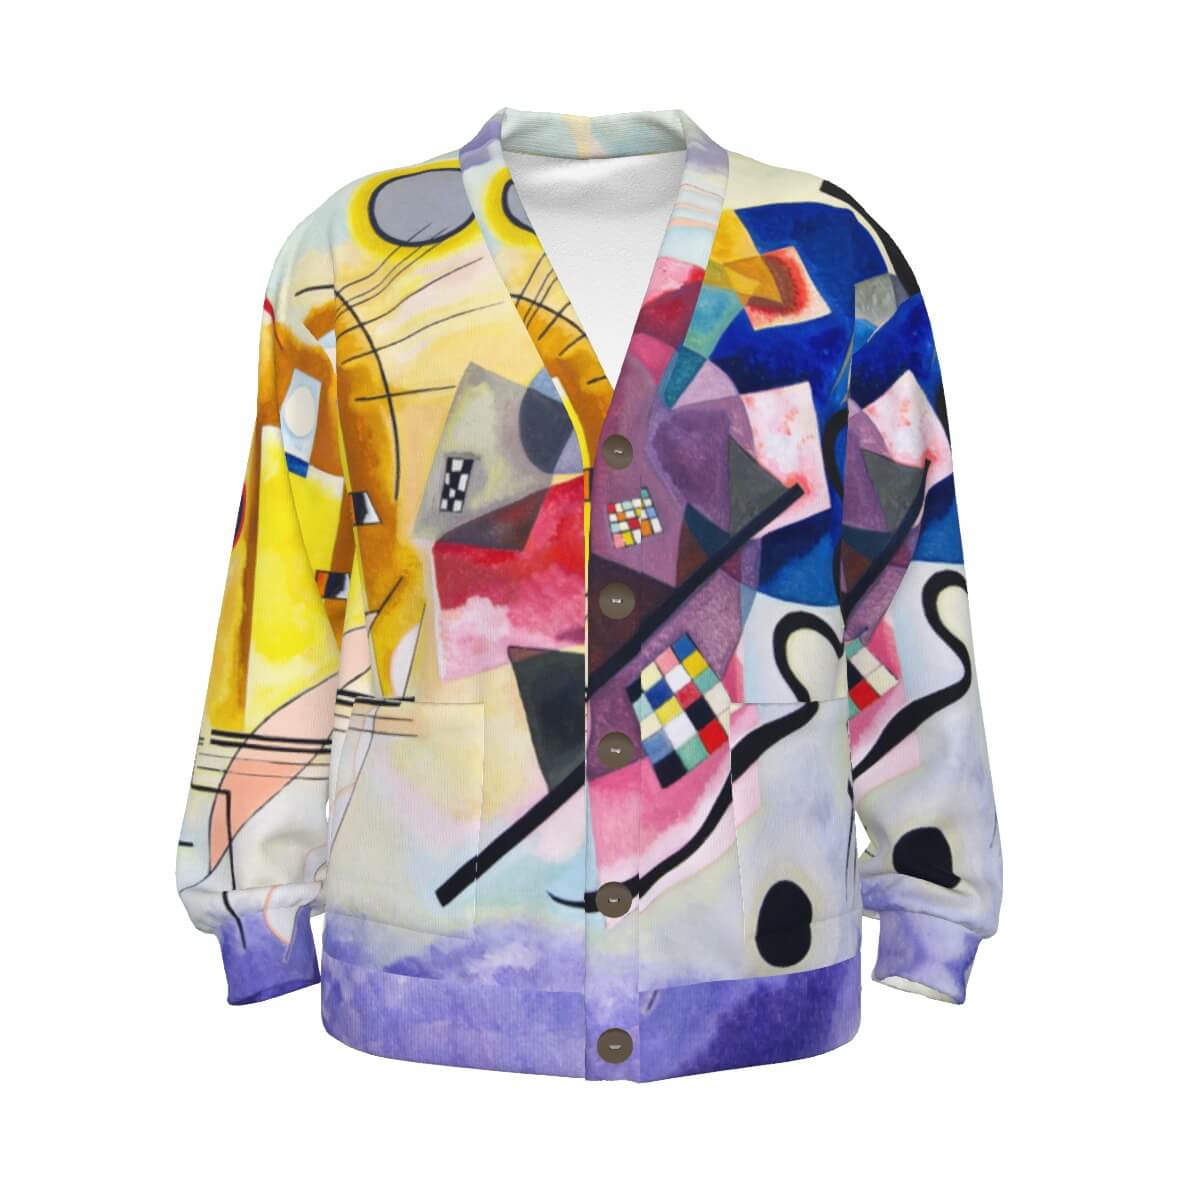 Vibrant Kandinsky-inspired fleece cardigan on display